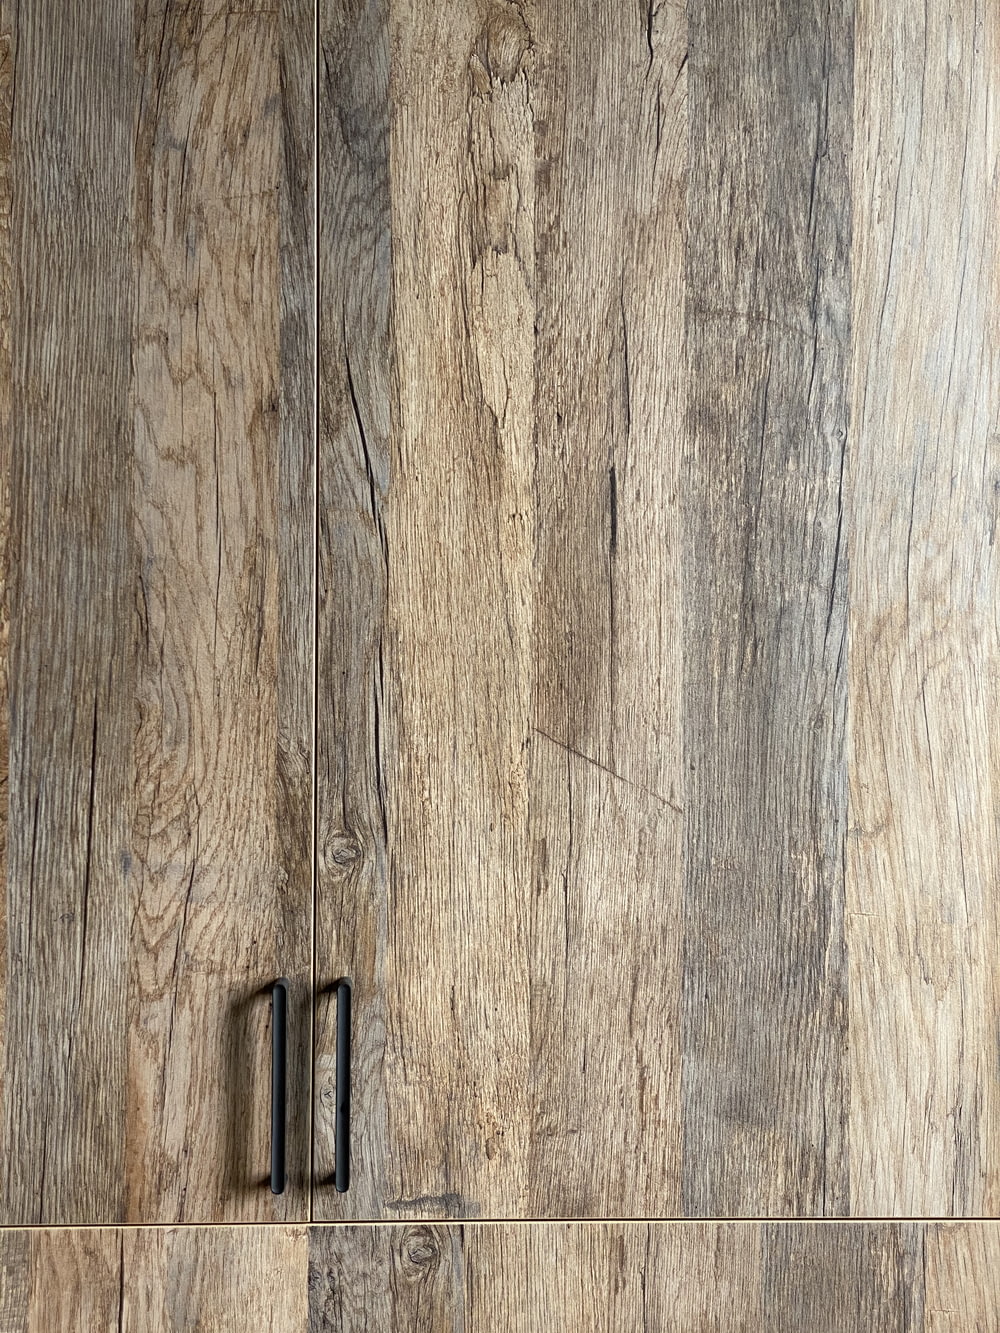 black metal door hinge on brown wooden surface